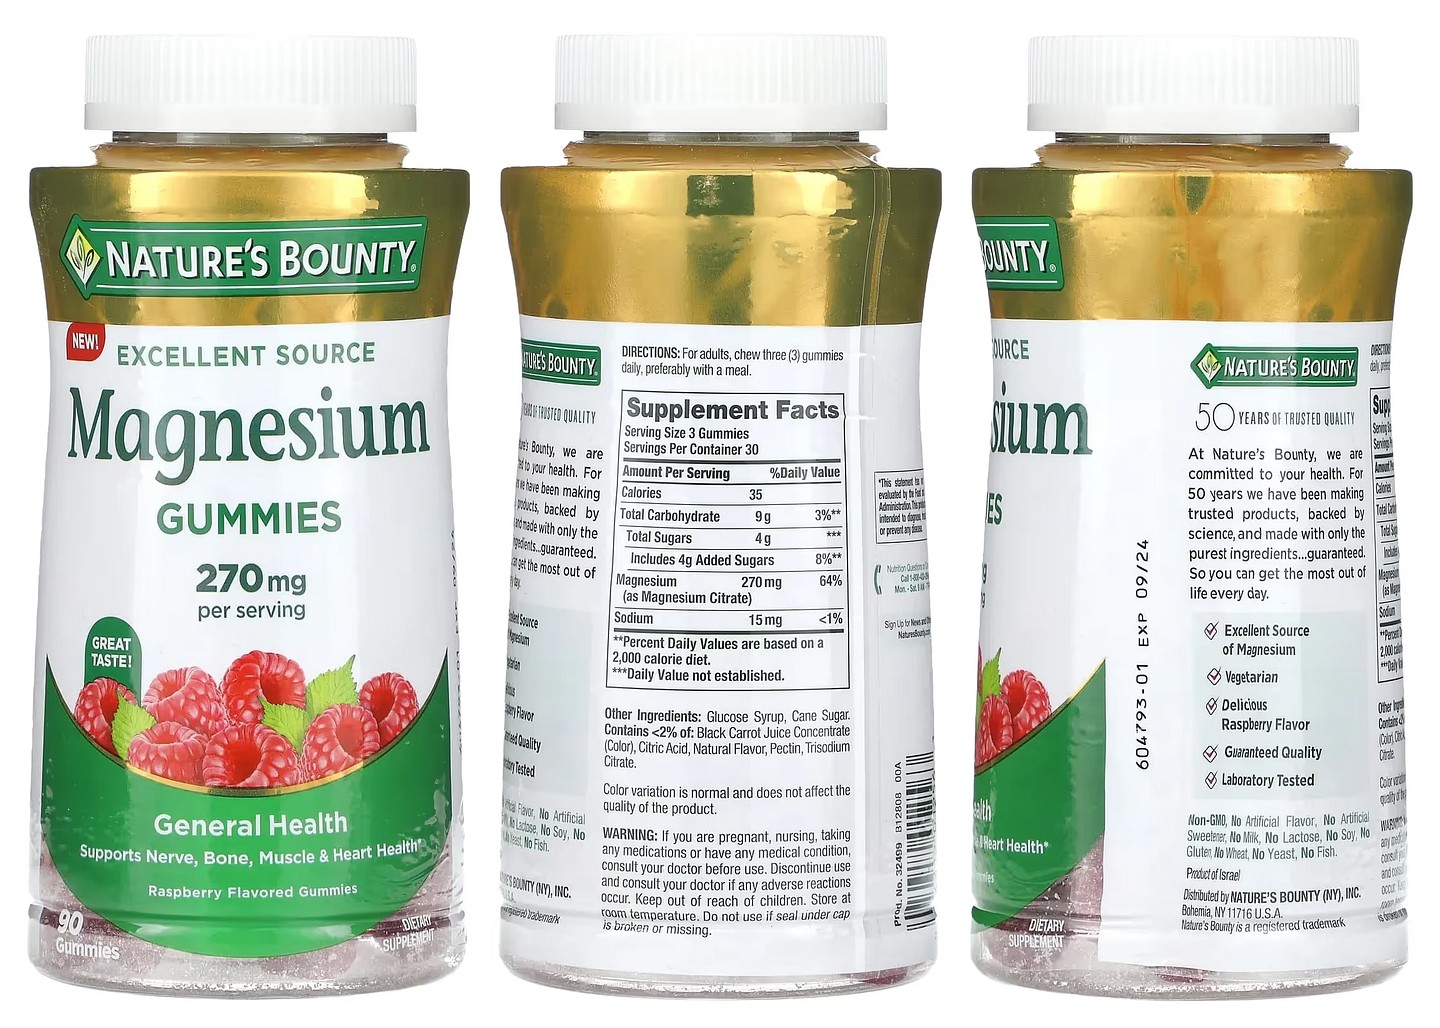 Nature's Bounty, Magnesium Gummies packaging